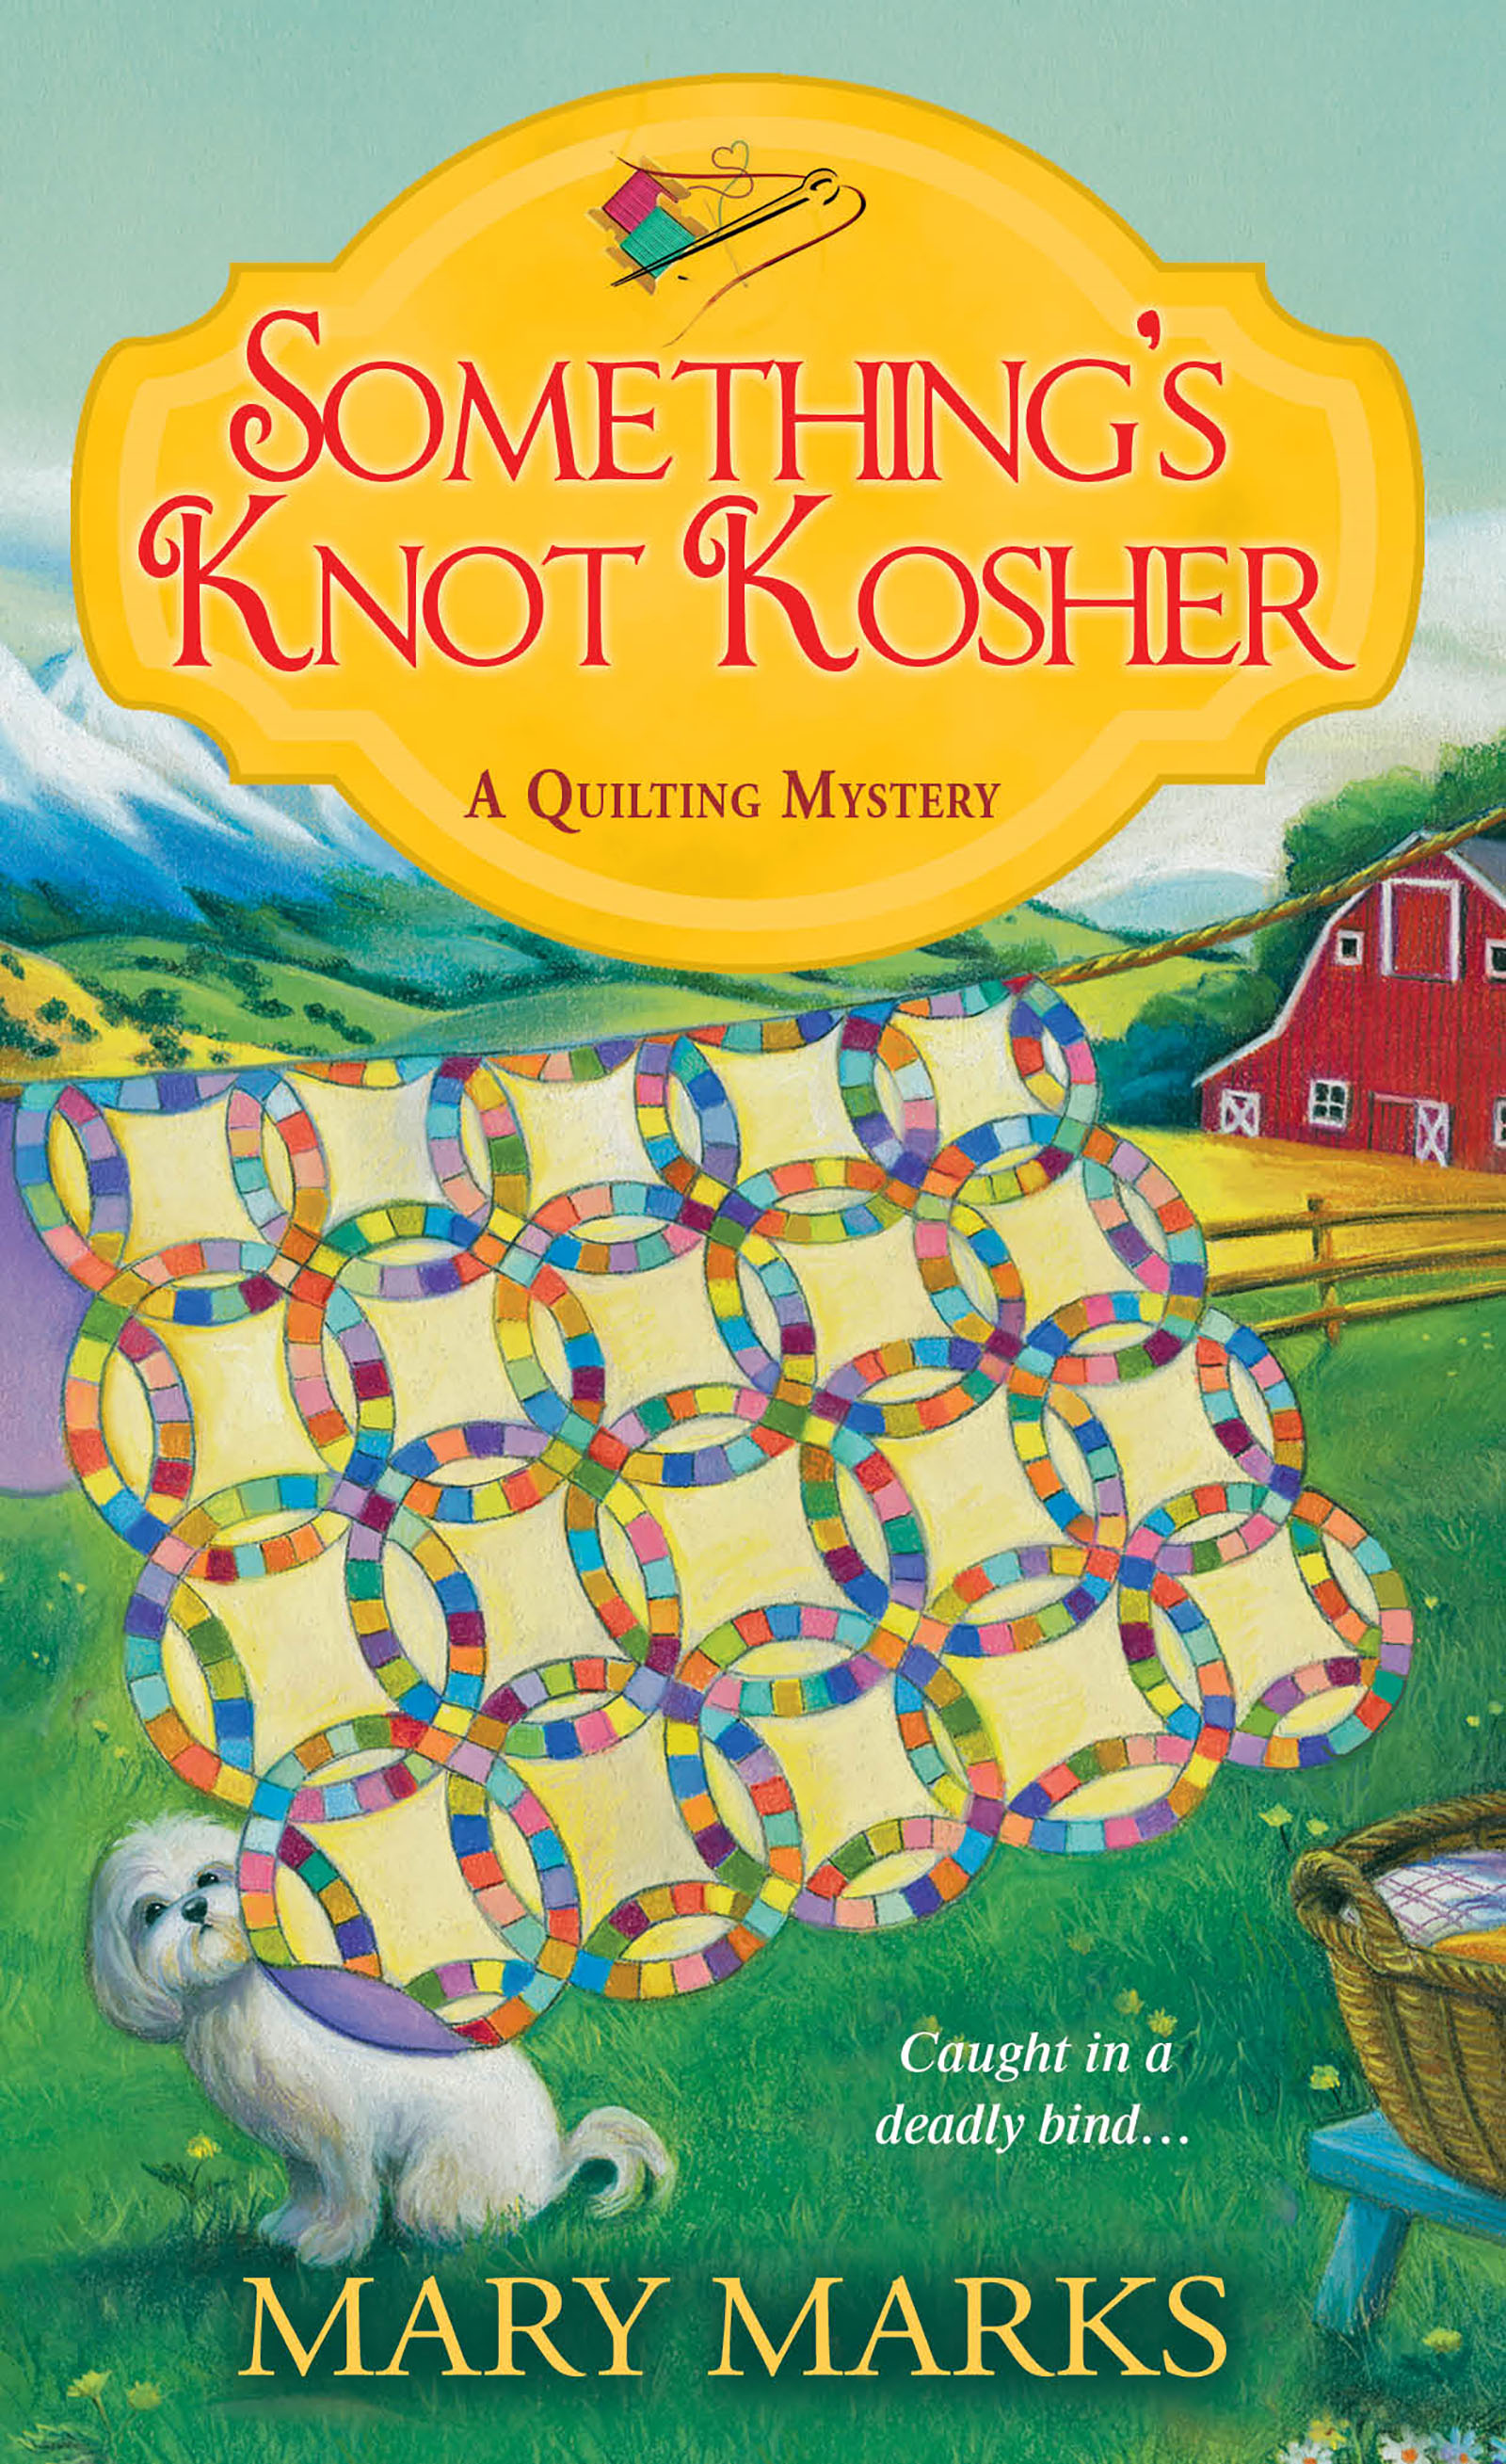 Something's knot kosher cover image